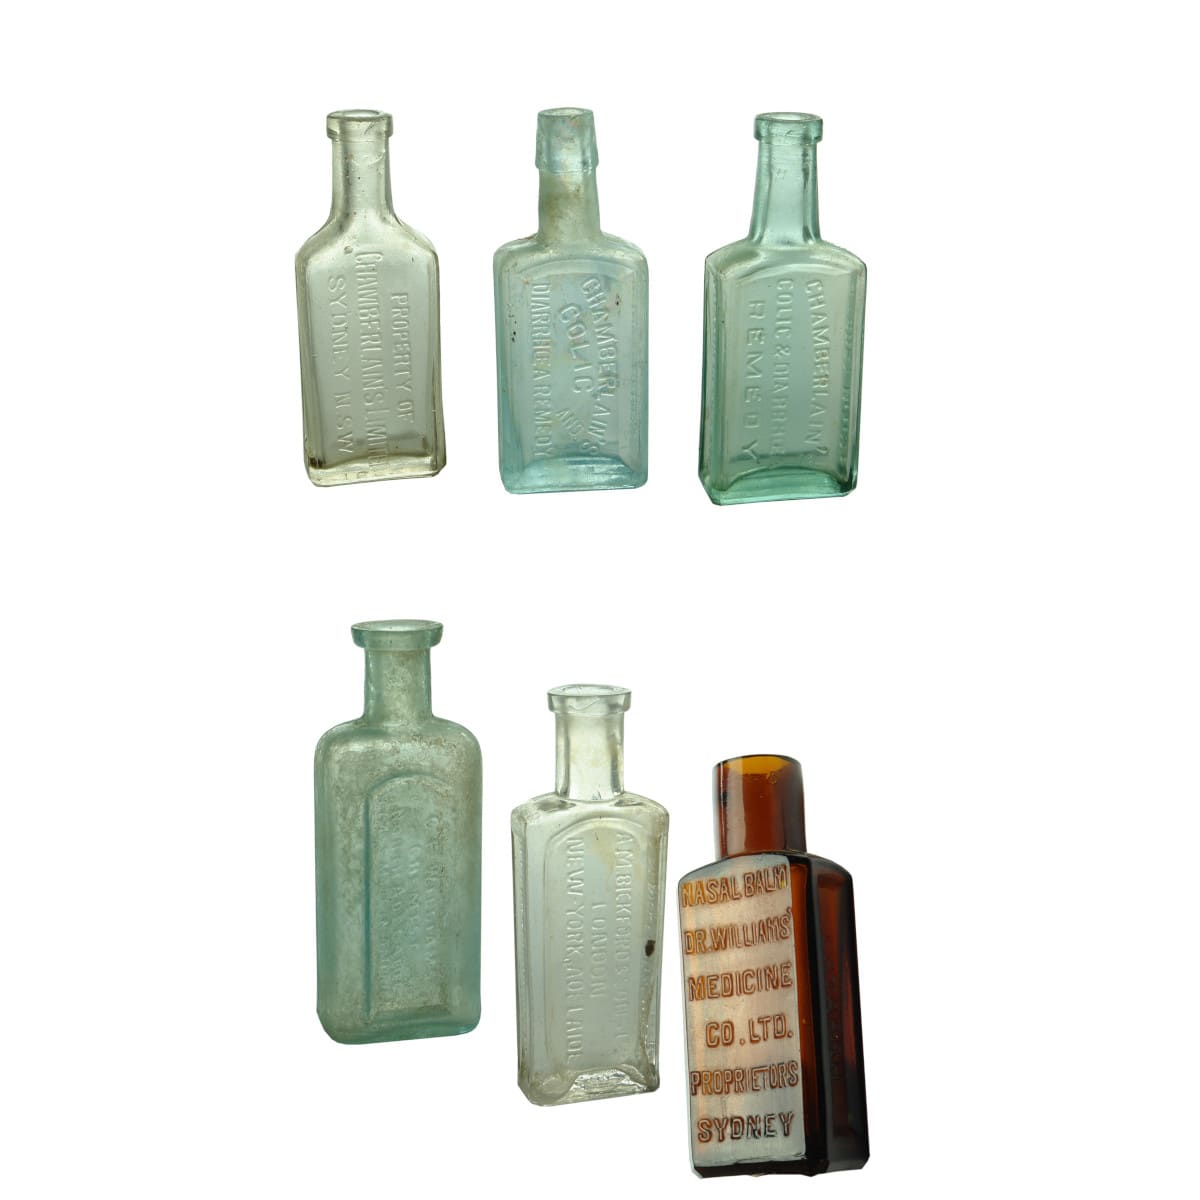 6 Chemist type Bottles: 3 x Chamberlain Remedies; C. F. Williams North Adelaide; A. M. Bickford & Sons Ltd; Dr Williams Medicine Co.